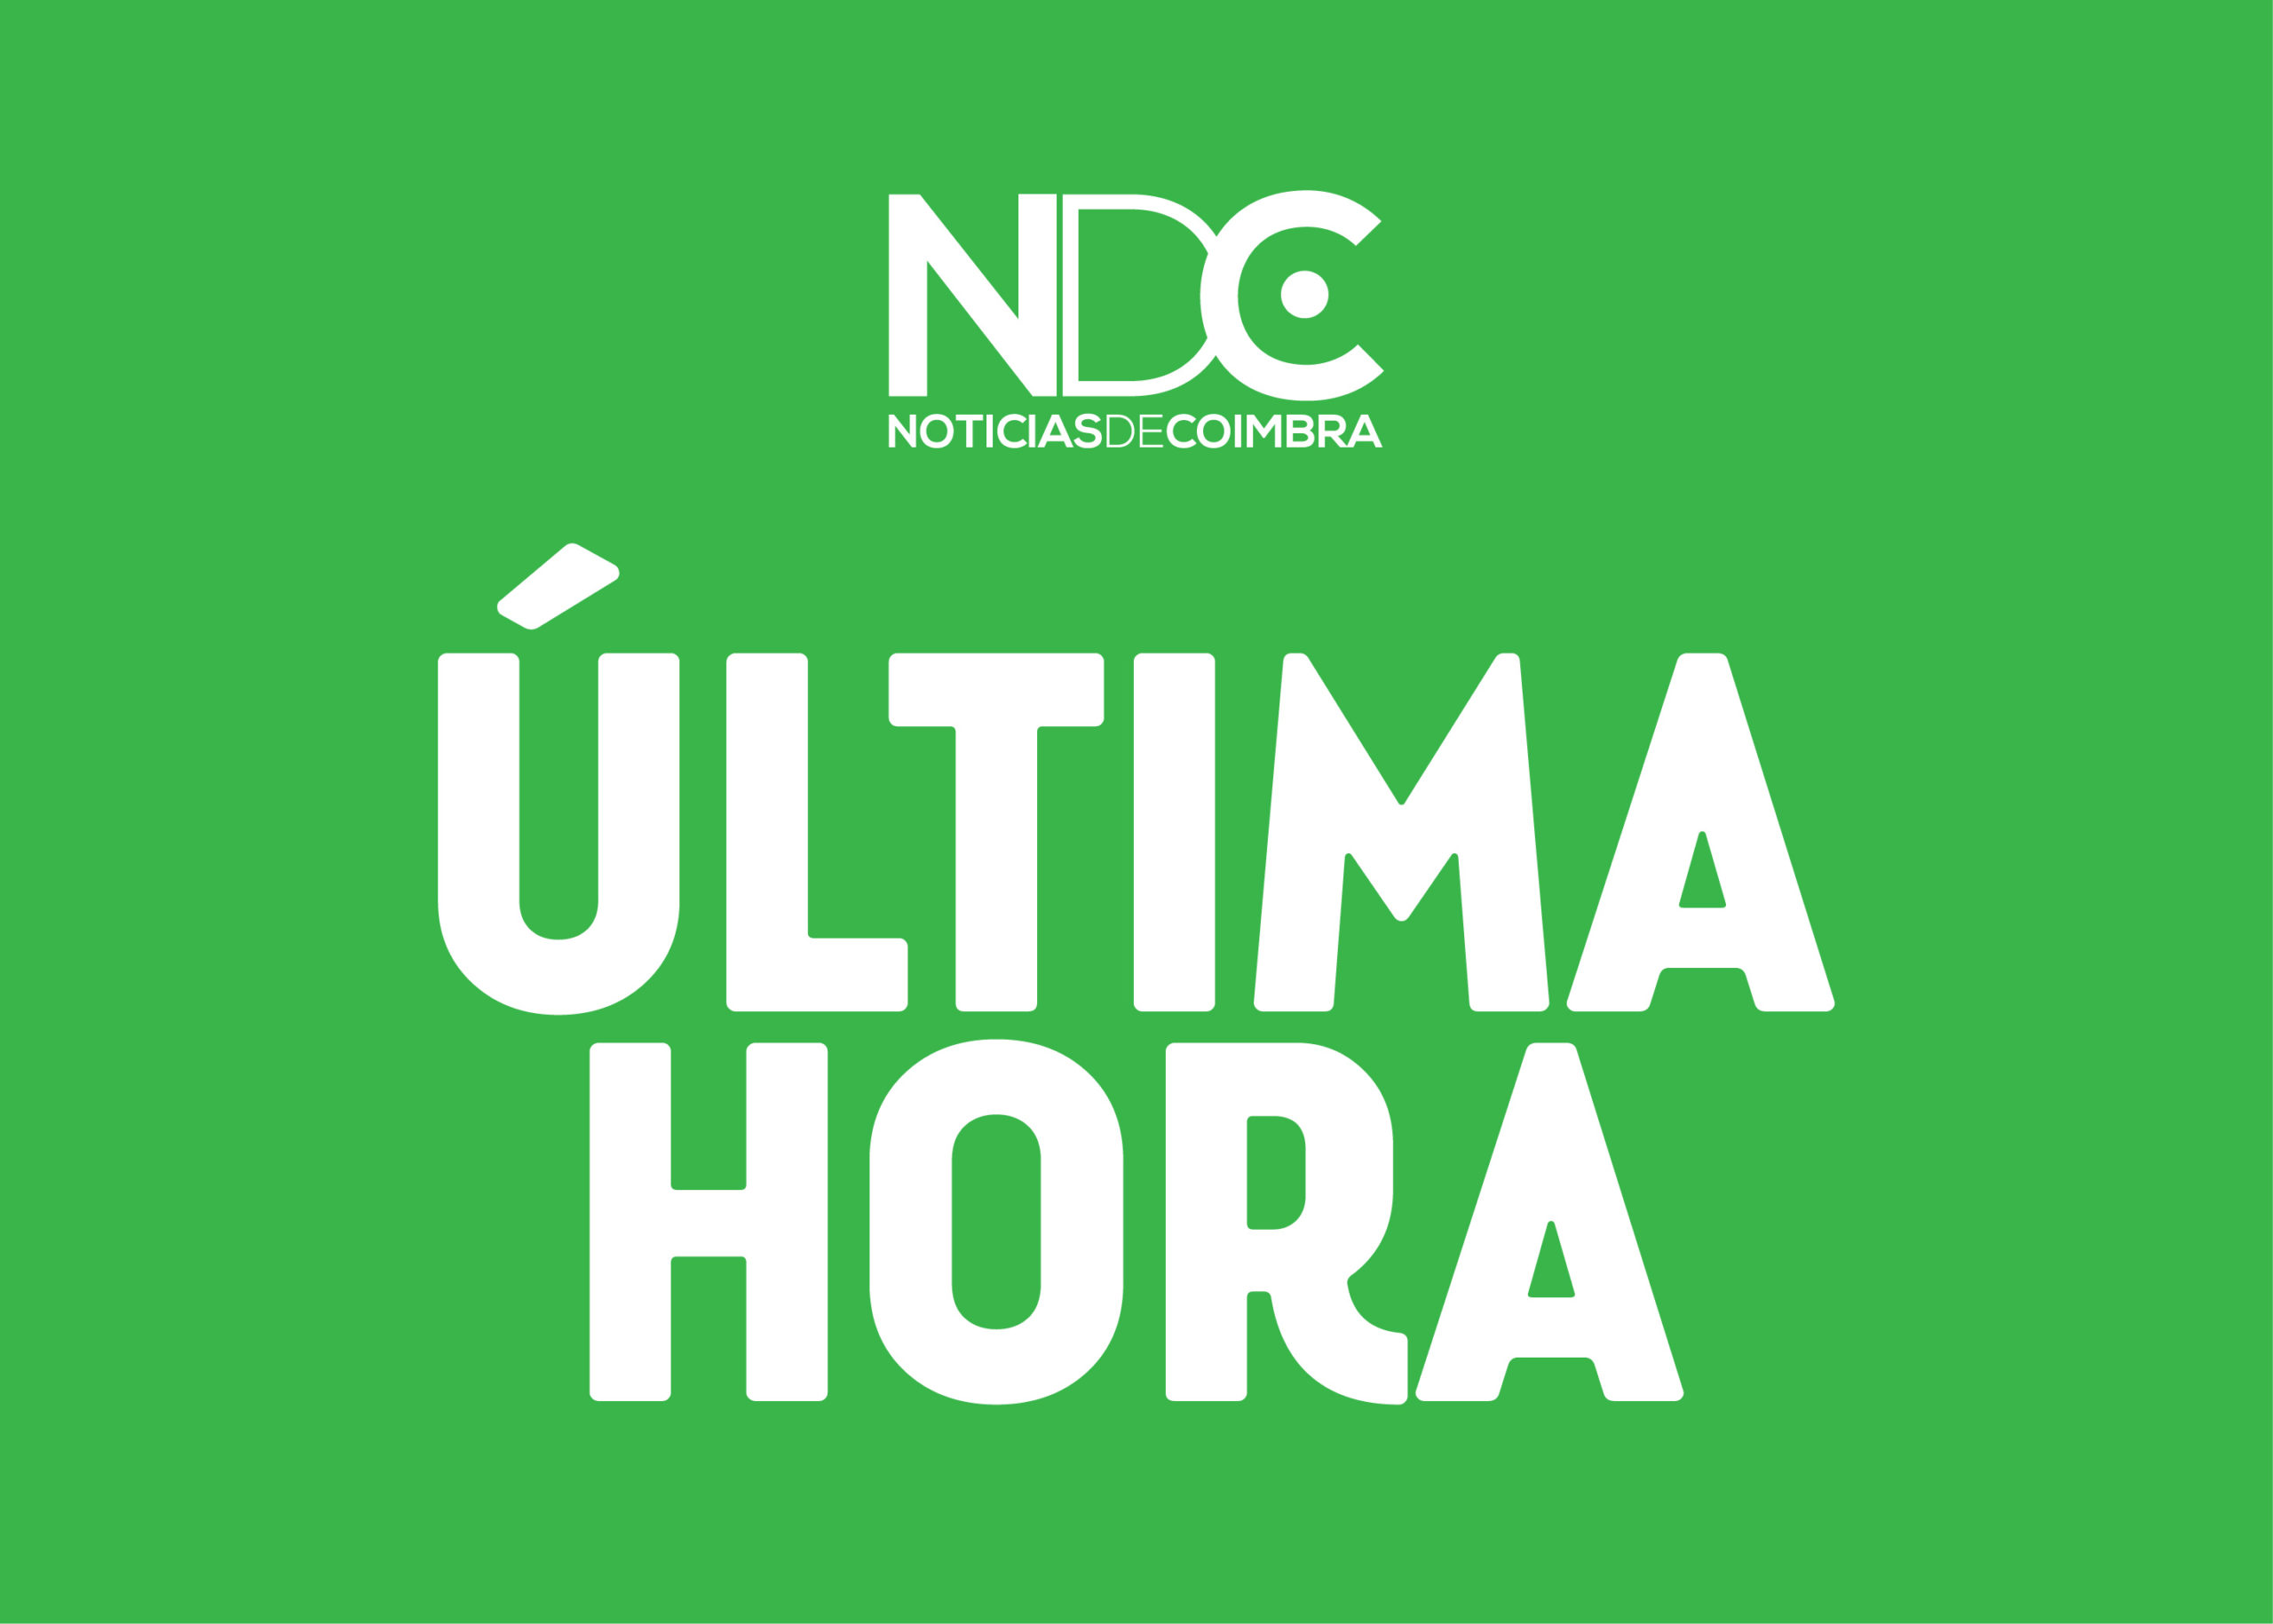 https://www.noticiasdecoimbra.pt/wp-content/uploads/2020/05/ultima-hora-ndc-1-scaled.jpg